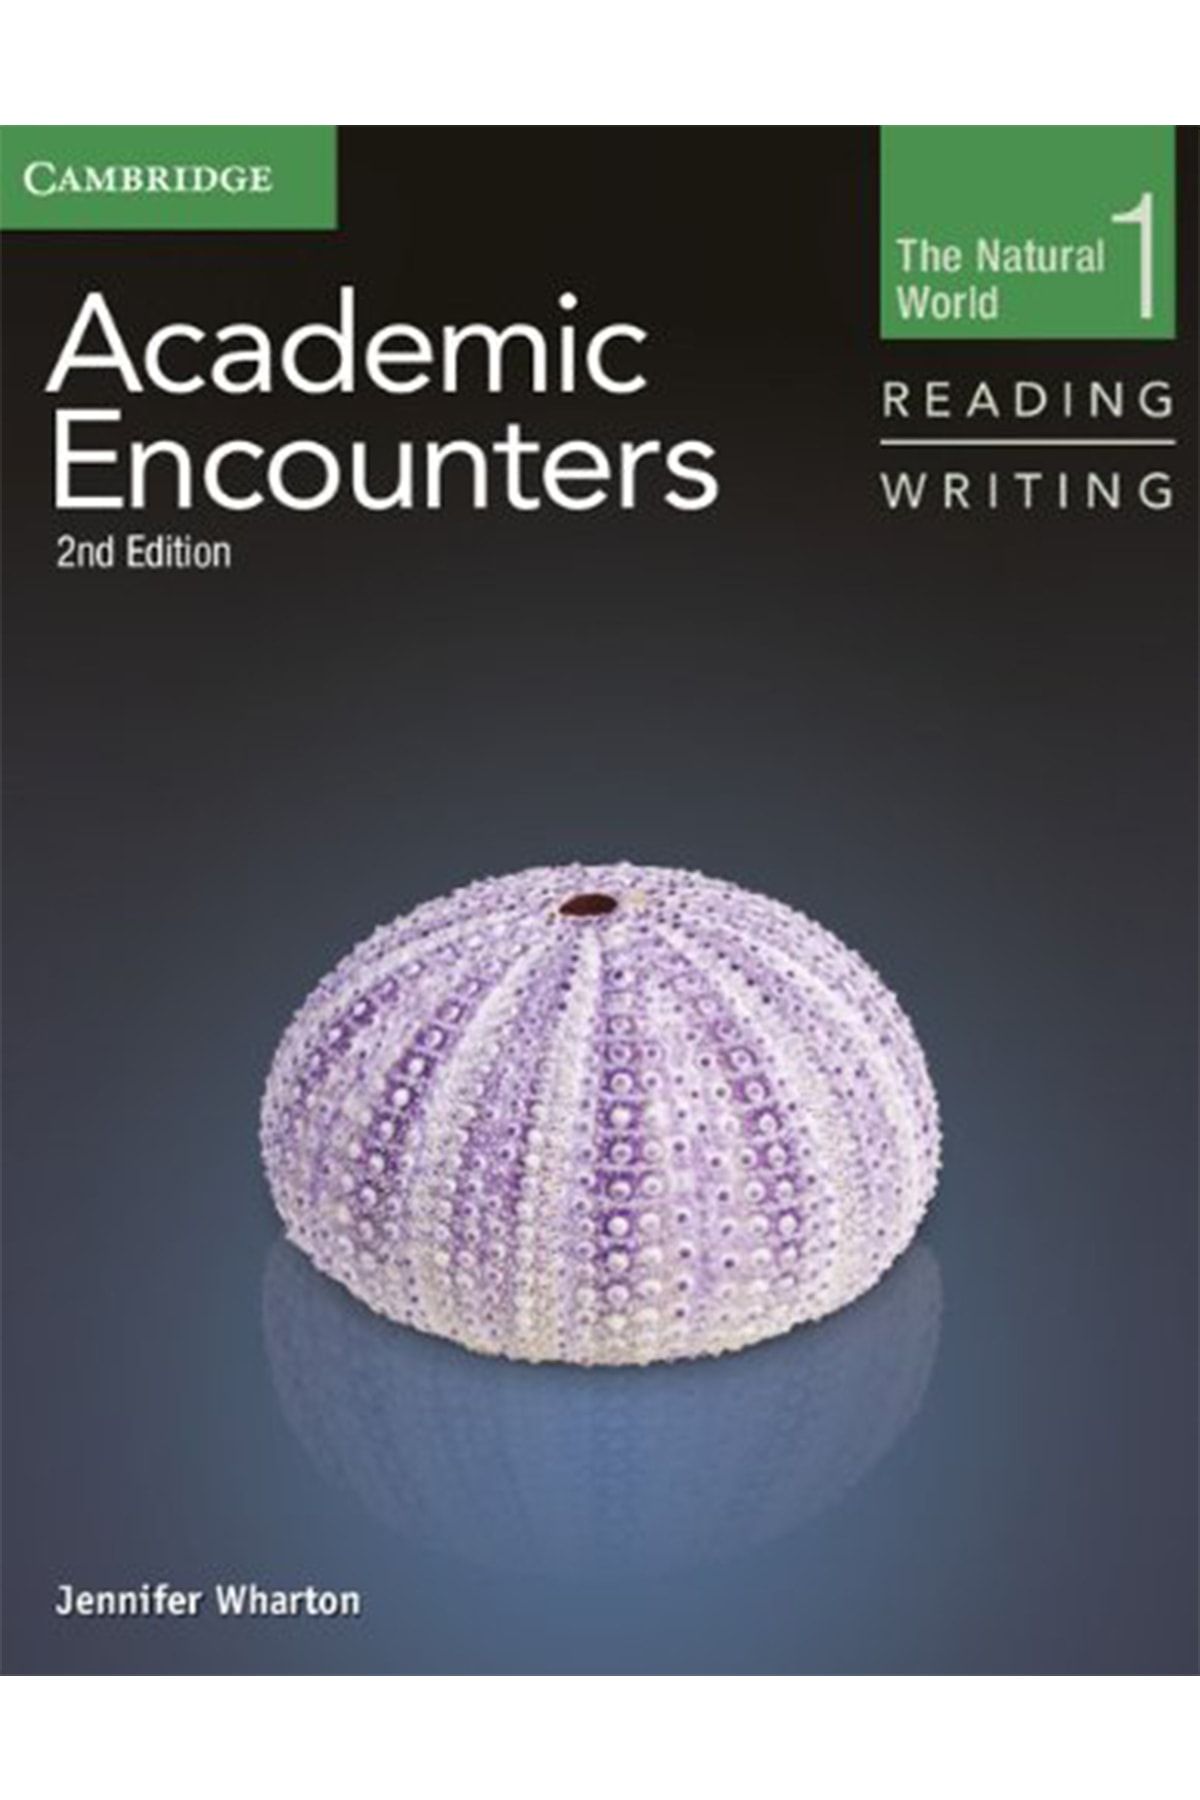 Pack　Writing　Reading　Academıc　Trendyol　Cambridge　University　Book　And　Encounters　Yorumları　Students　Fiyatı,